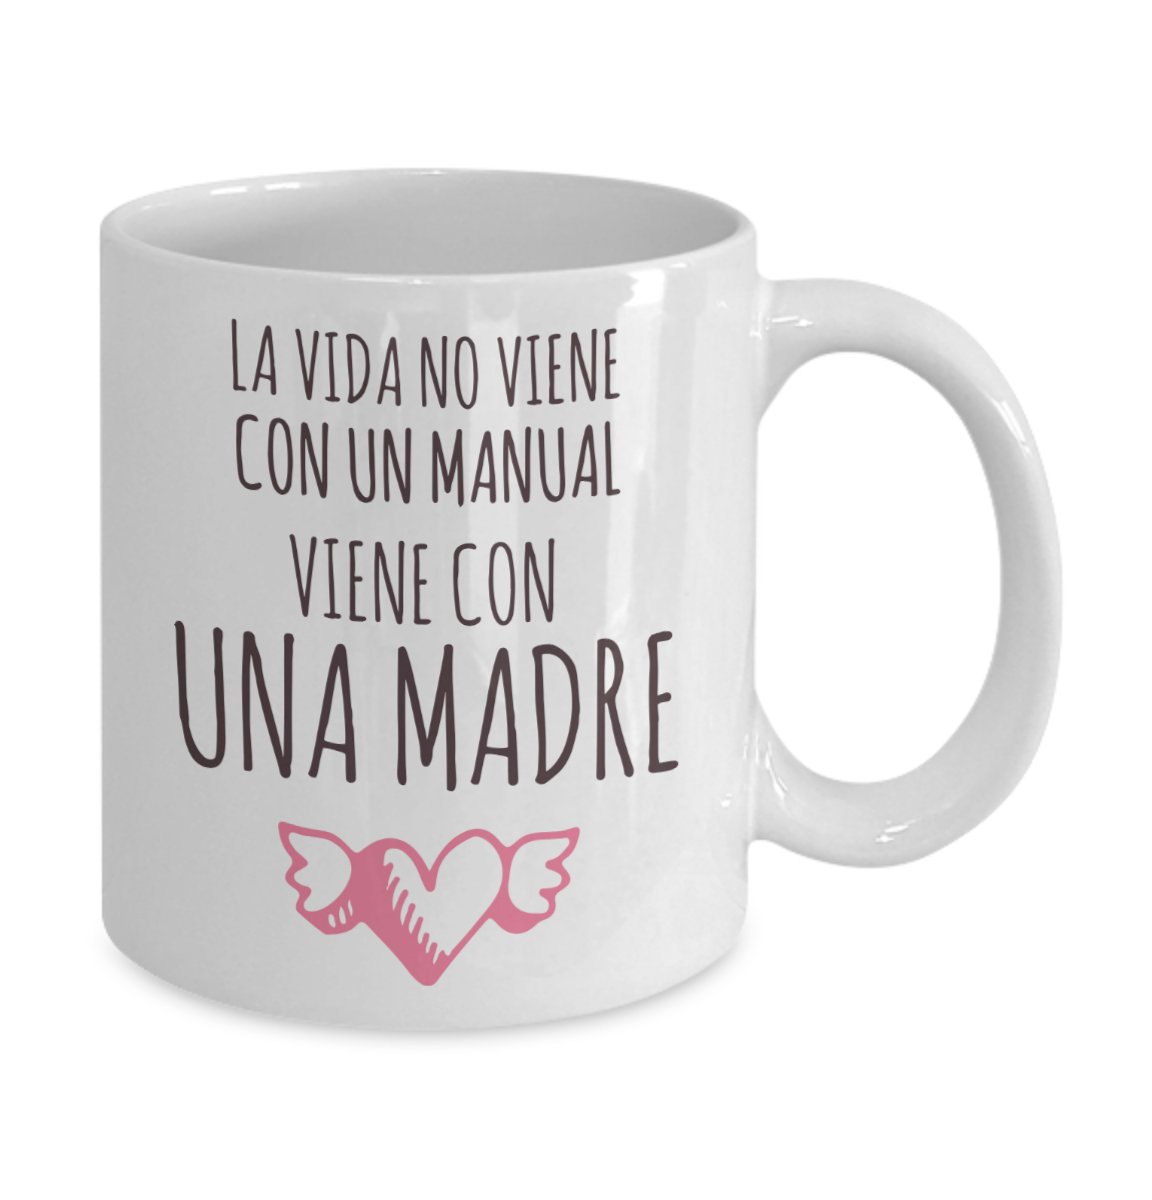 Excited to share the latest addition to my #etsy shop: Regalos madre mugs taza para mama para el dia de las madres san valentino navidad etsy.me/2W46hfW #tazadecafe #diadelamadre #diadelasmadres #regaloparaella #abuelamug #regaloparaab #coffeemug #coffee